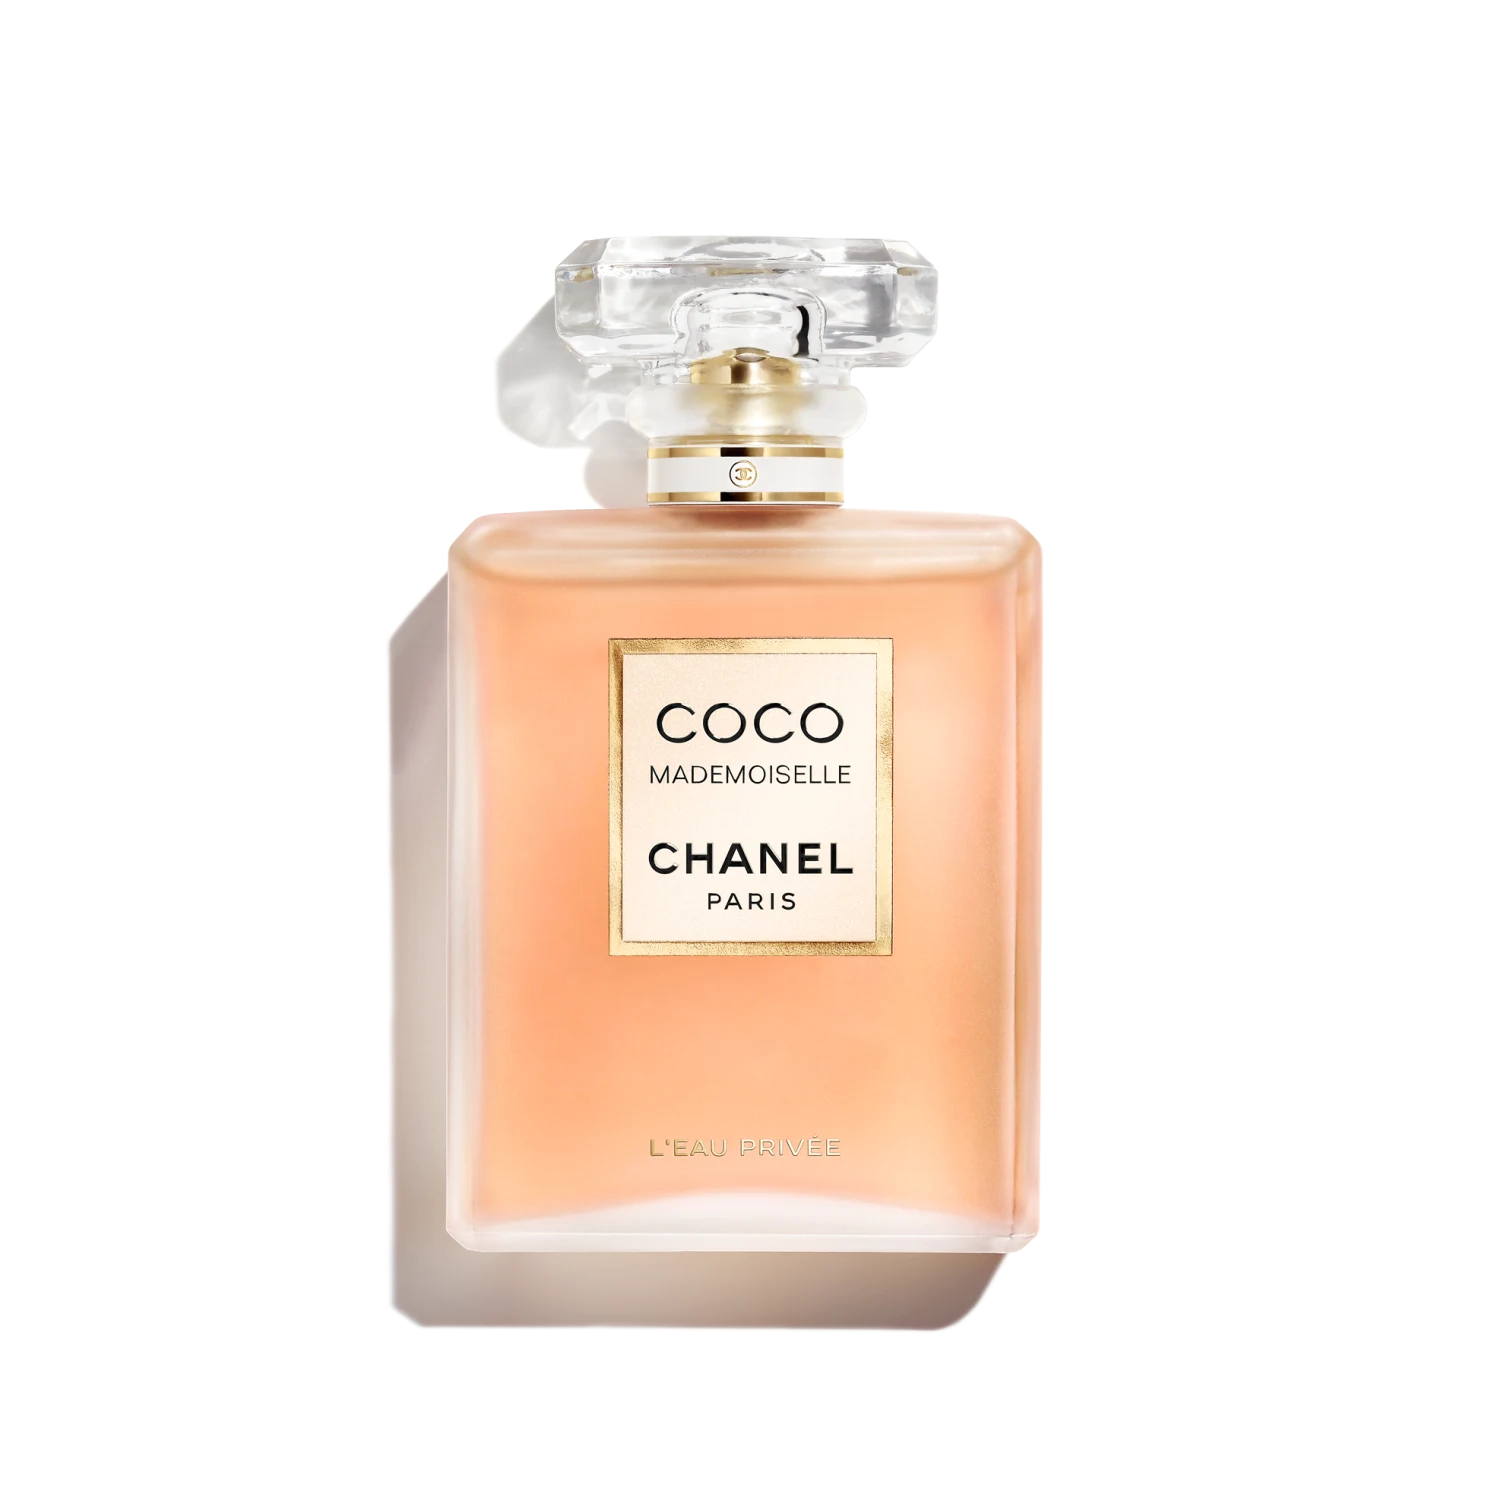 Вода парфюмерная Chanel Coco Mademoiselle L'Eau Privee женская, 100 мл mademoiselle ricci